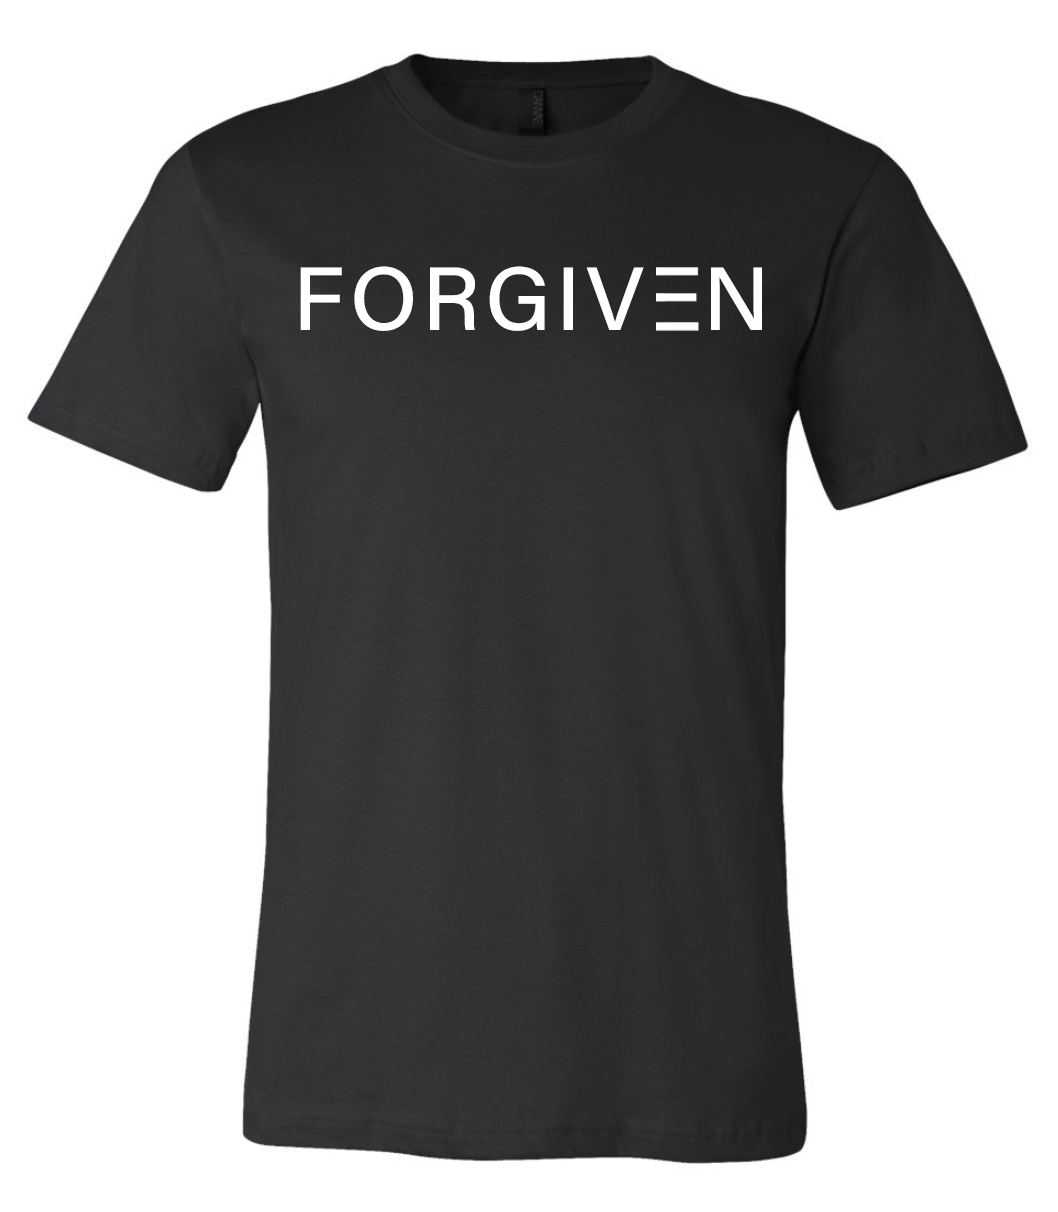 Black Christian t-shirt that says Forgiven